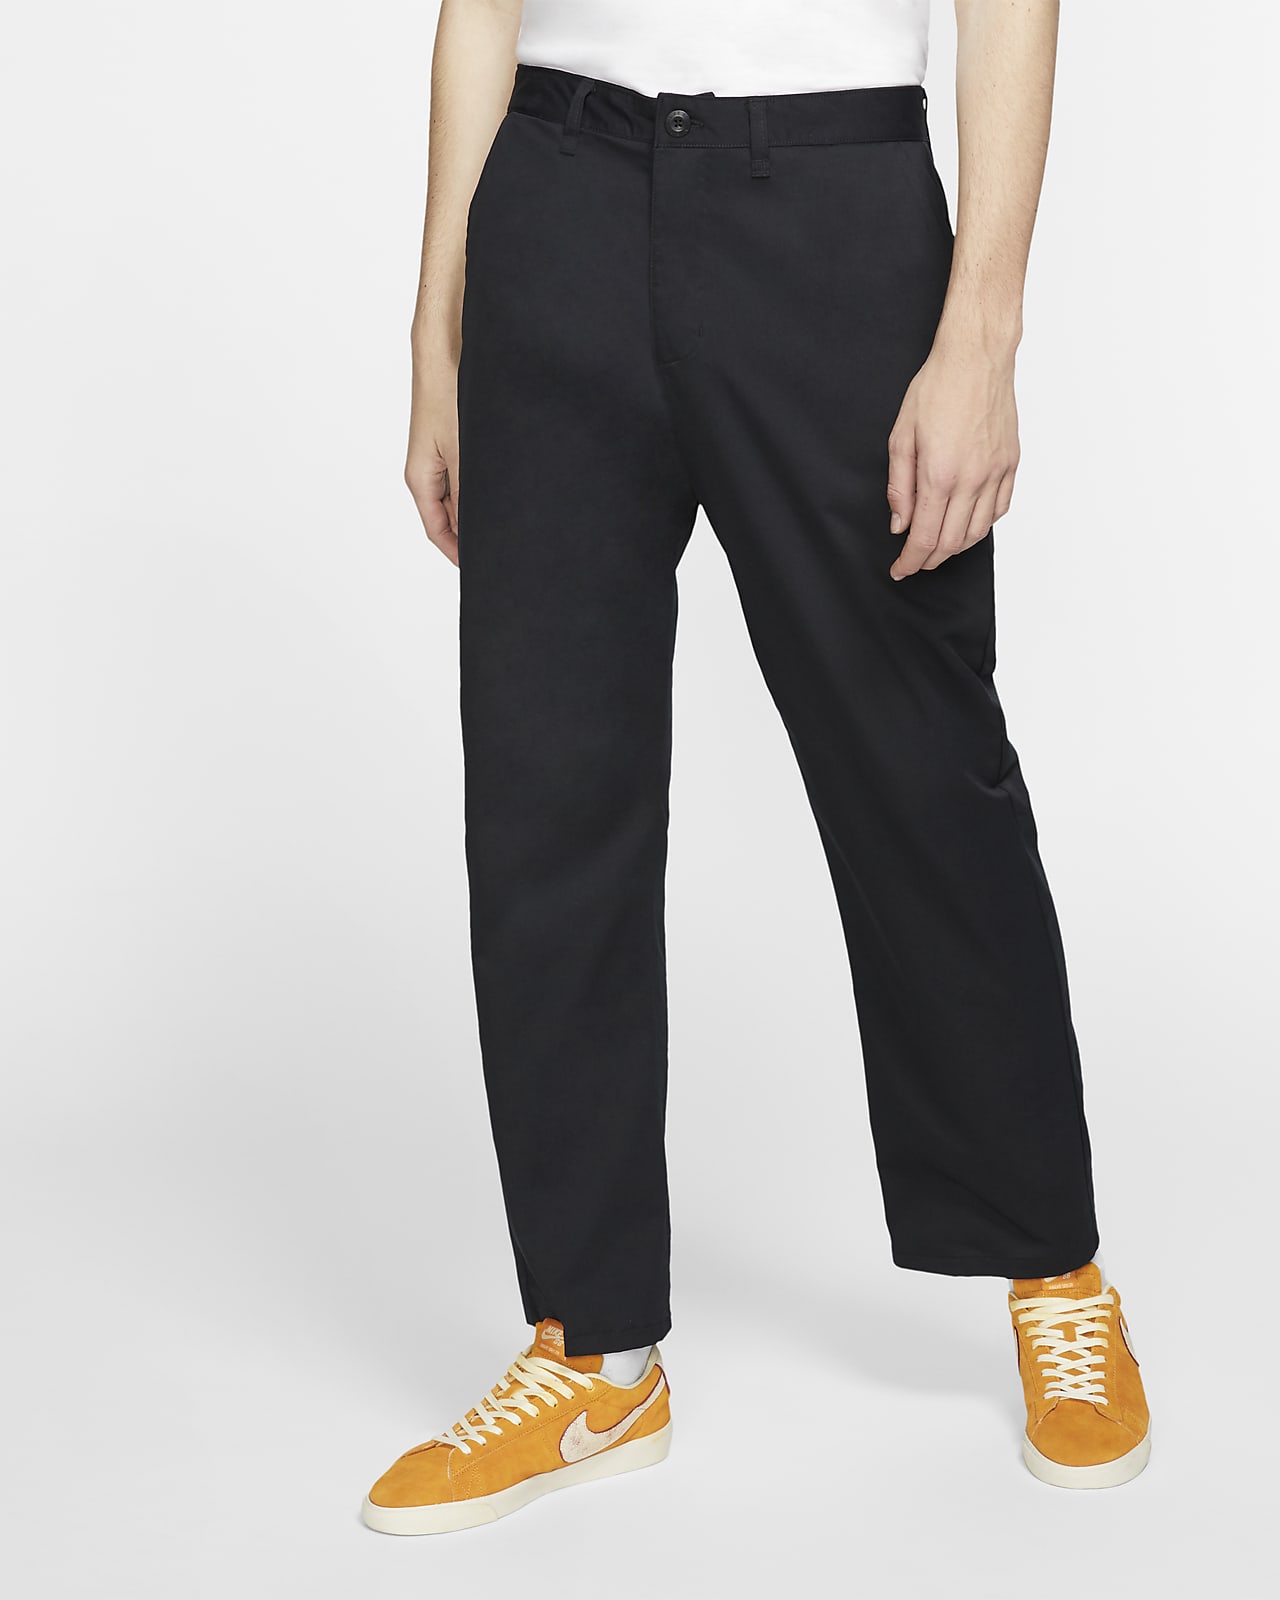 Pantalones de ajuste holgado para hombre Nike SB Dri-FIT FTM